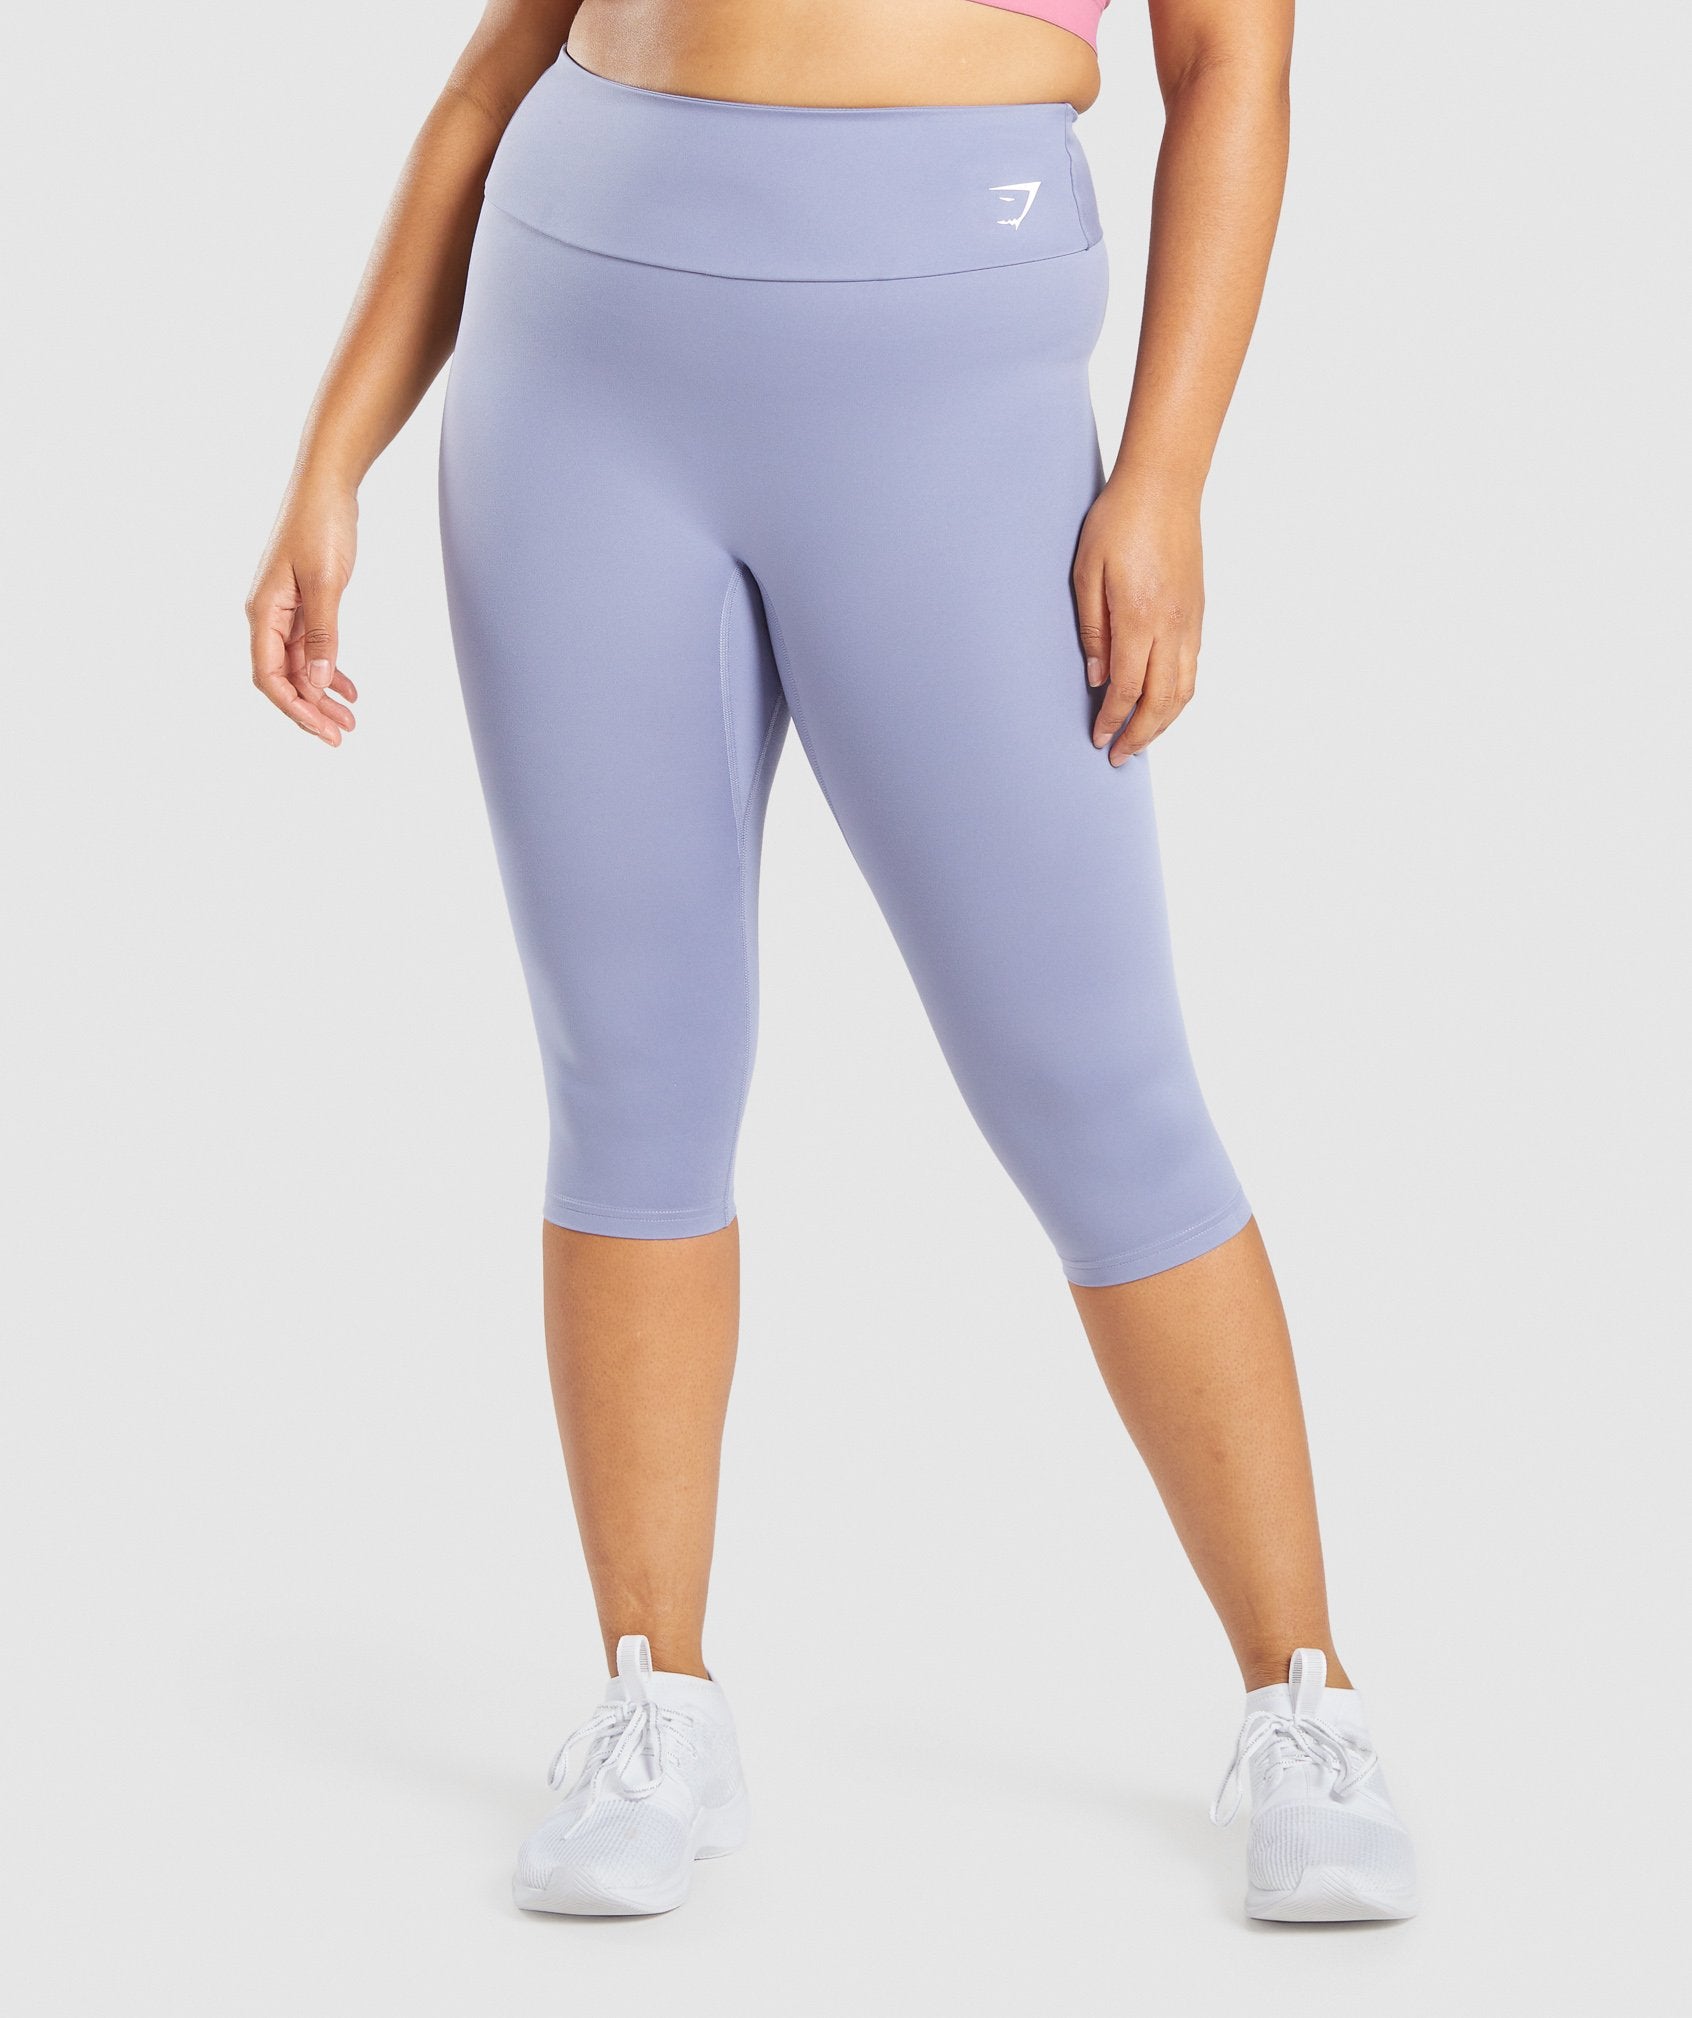 Gymshark Womens XS Blue Euphoria Leggings Solid Athleisure Skinny - $39 -  From Gulfcoast